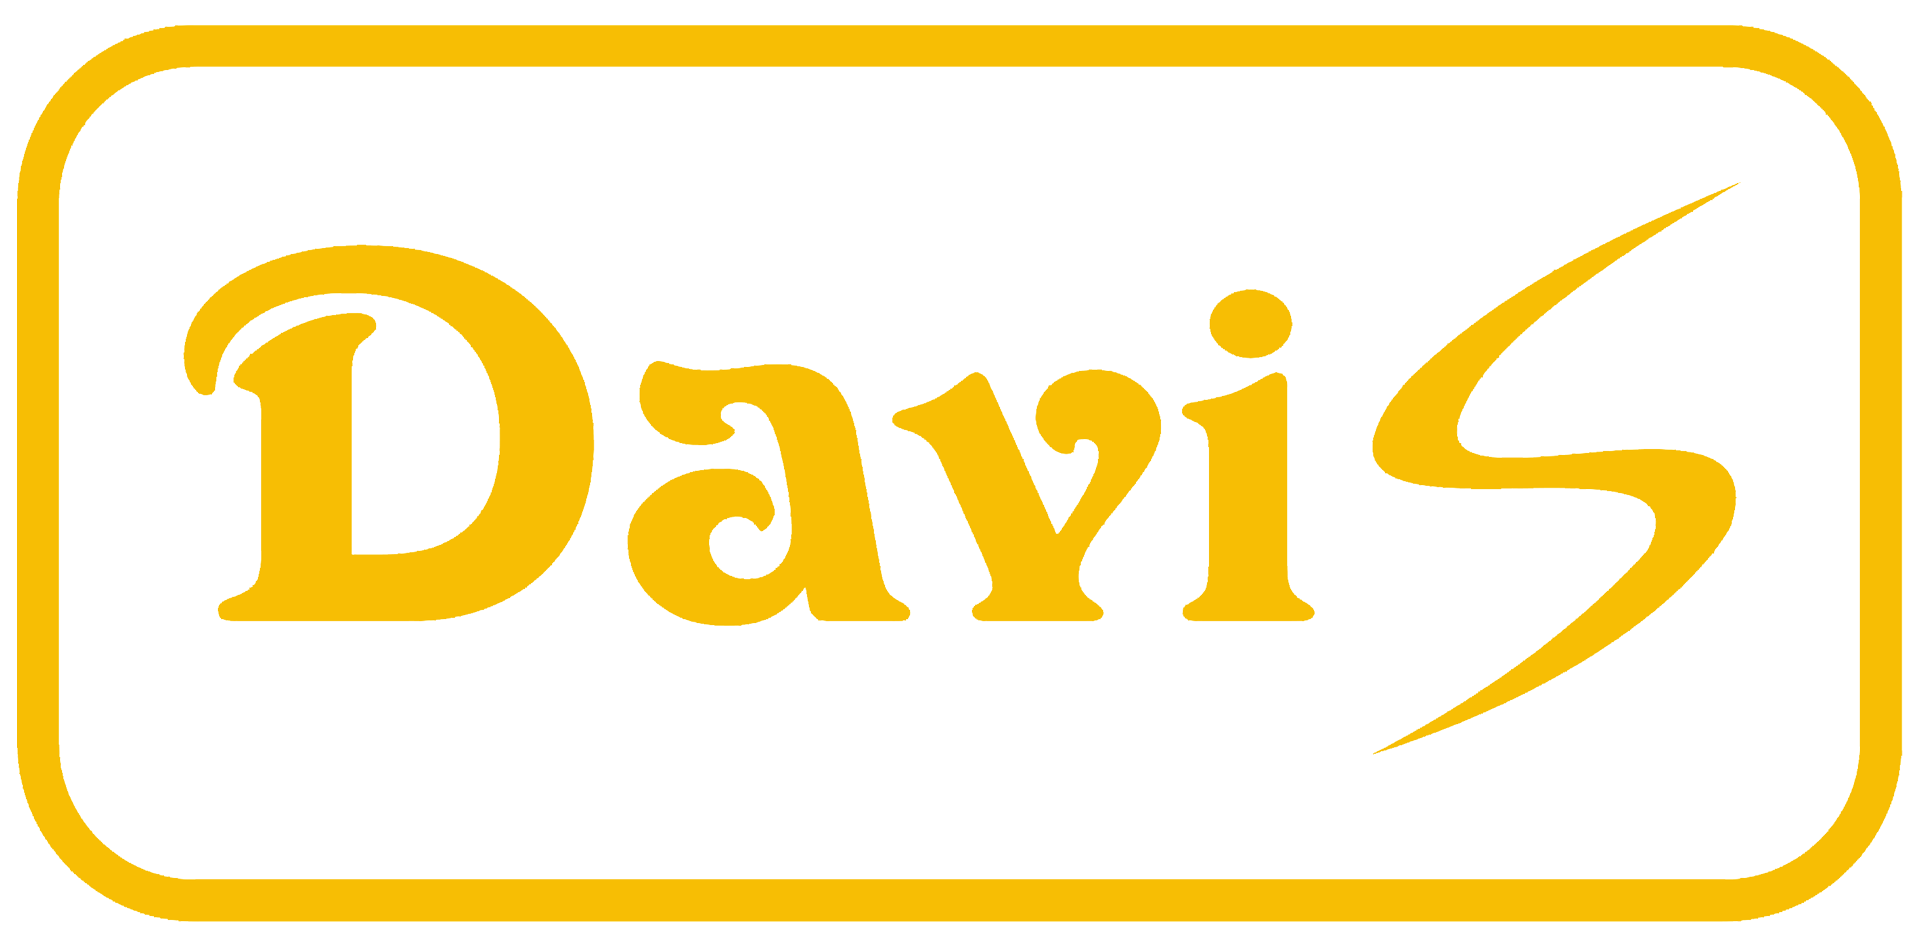 Davis.vn